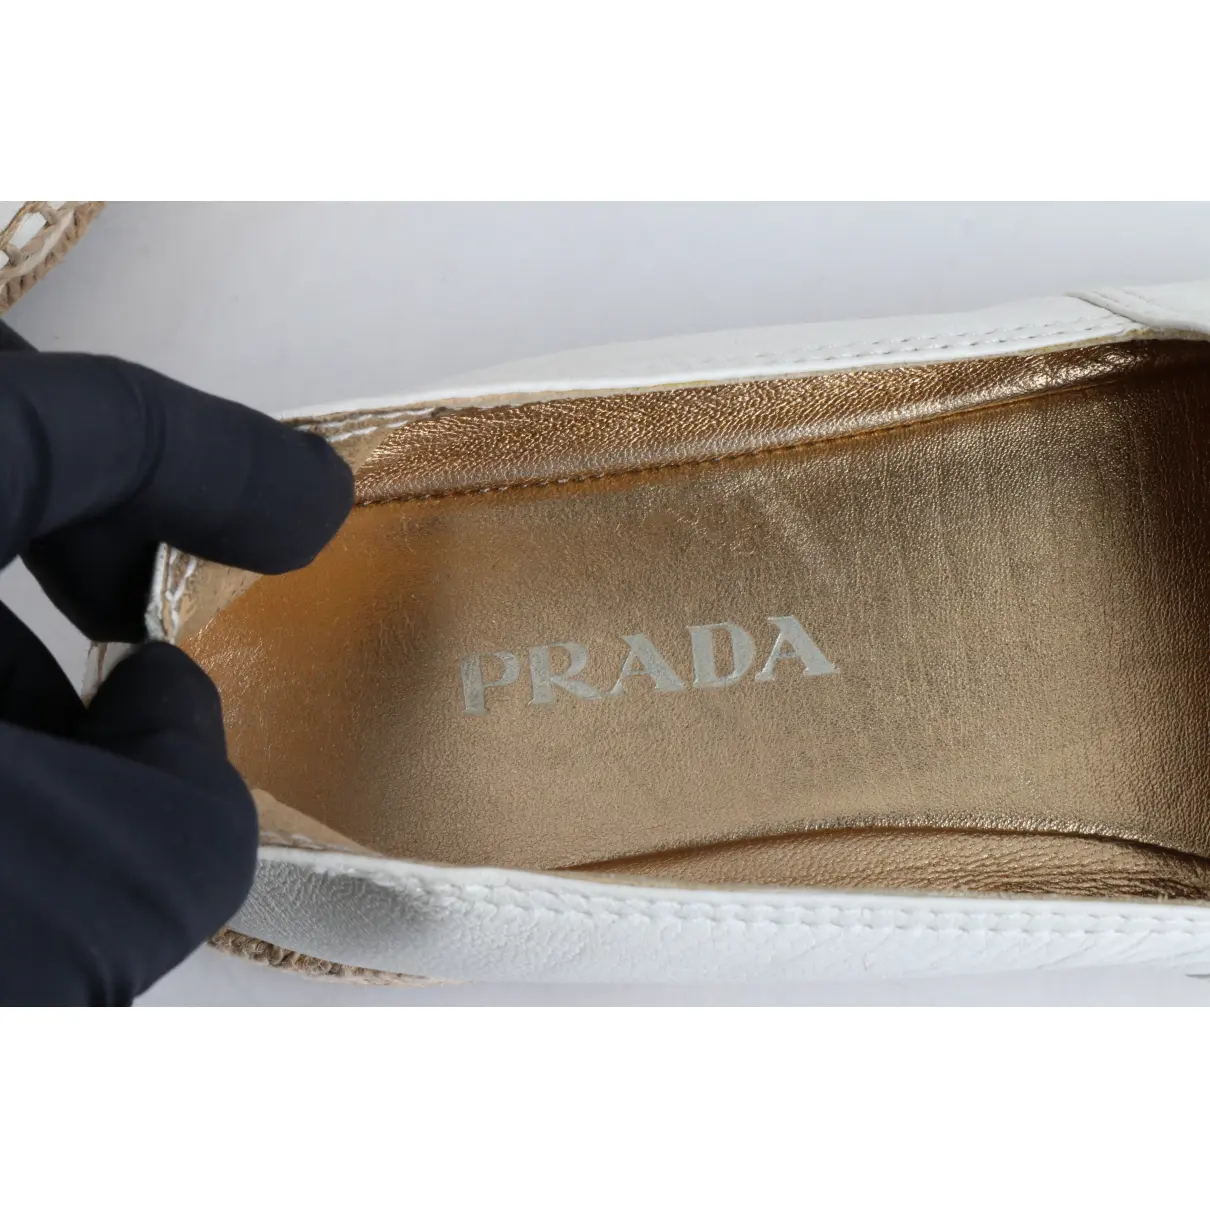 Buy Prada Leather espadrilles online